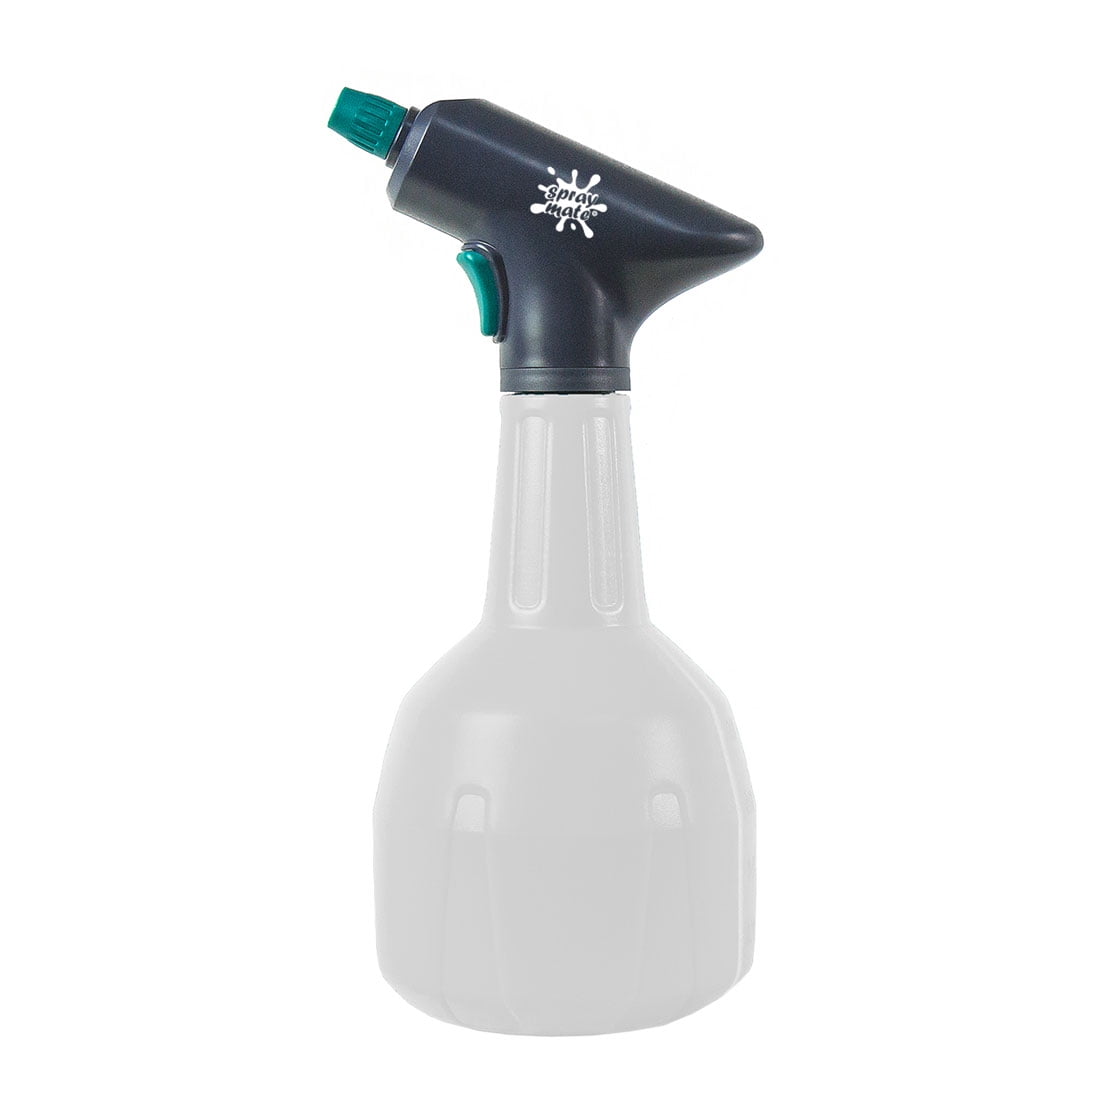 FERNDALE MASTISOL Liquid Medical Skin Adhesive Glue 15mL Bottle 0523-15  06/25